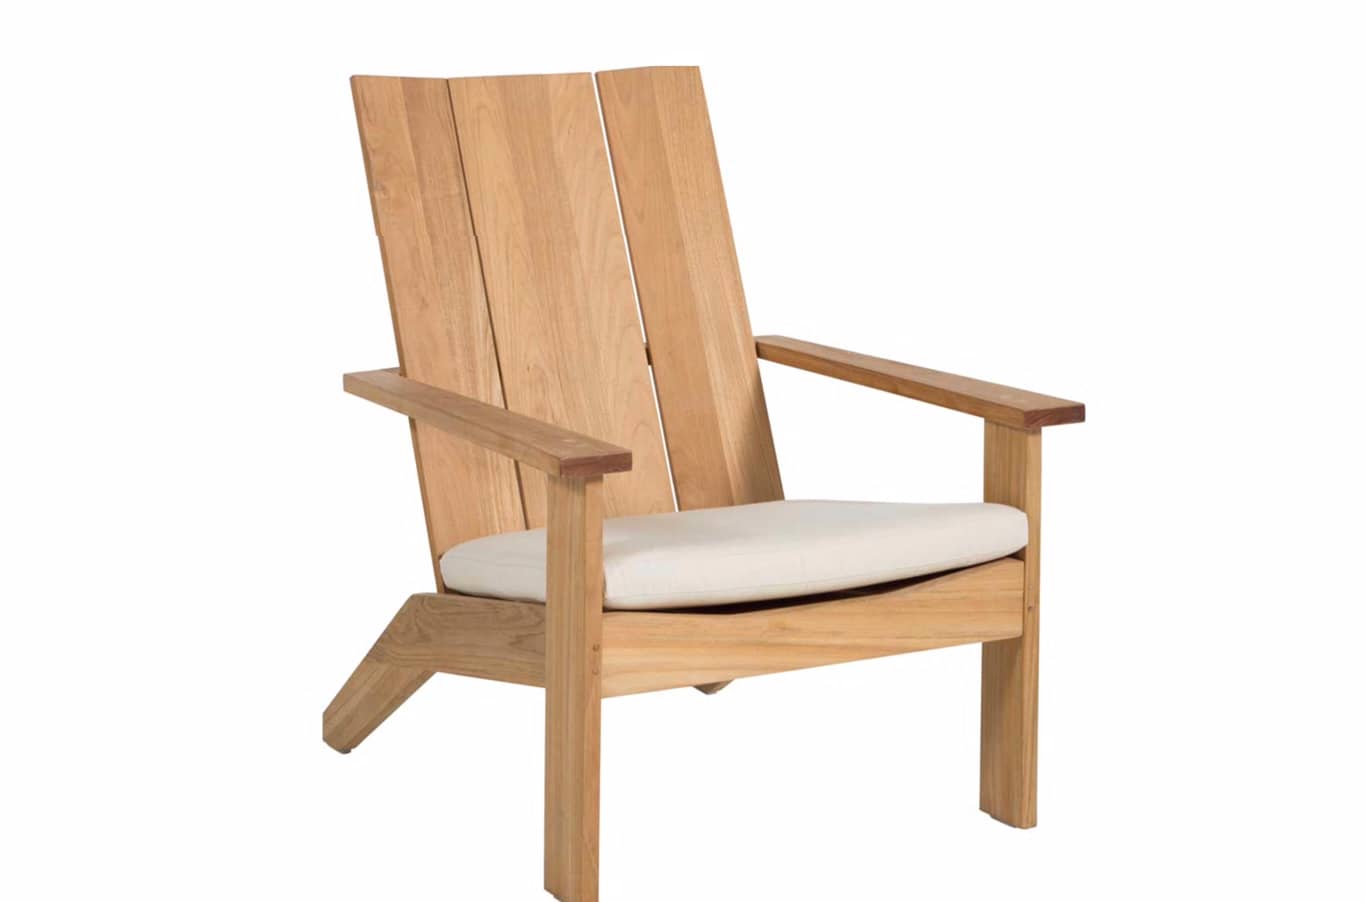 Made to Order Furniture. - Adirondack Chairs 001-01